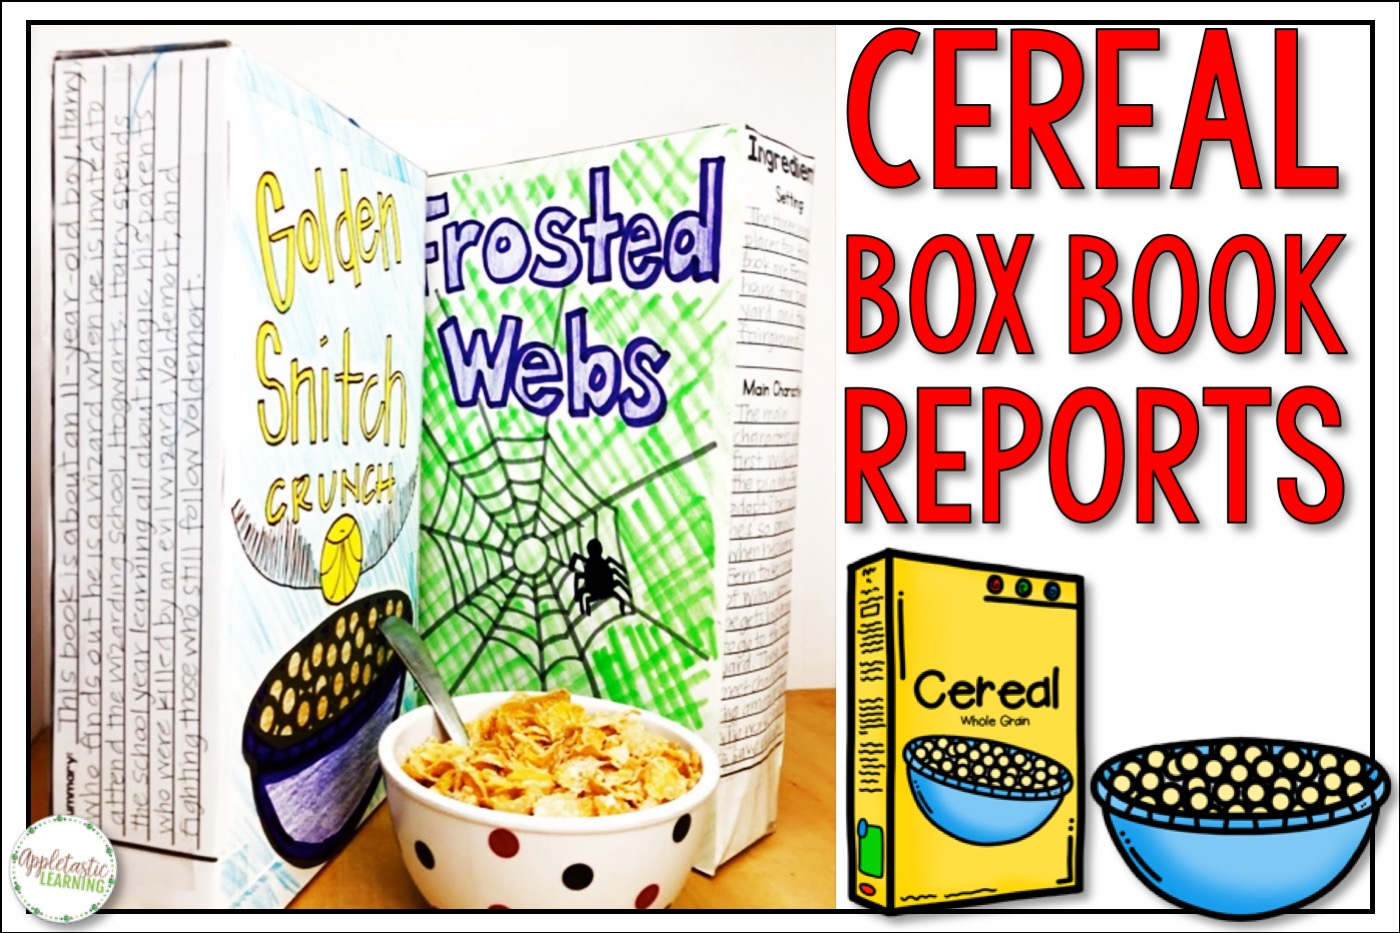 Cereal Box Book Reports - A Fun Alternative! - Appletastic Learning Regarding Cereal Box Book Report Template